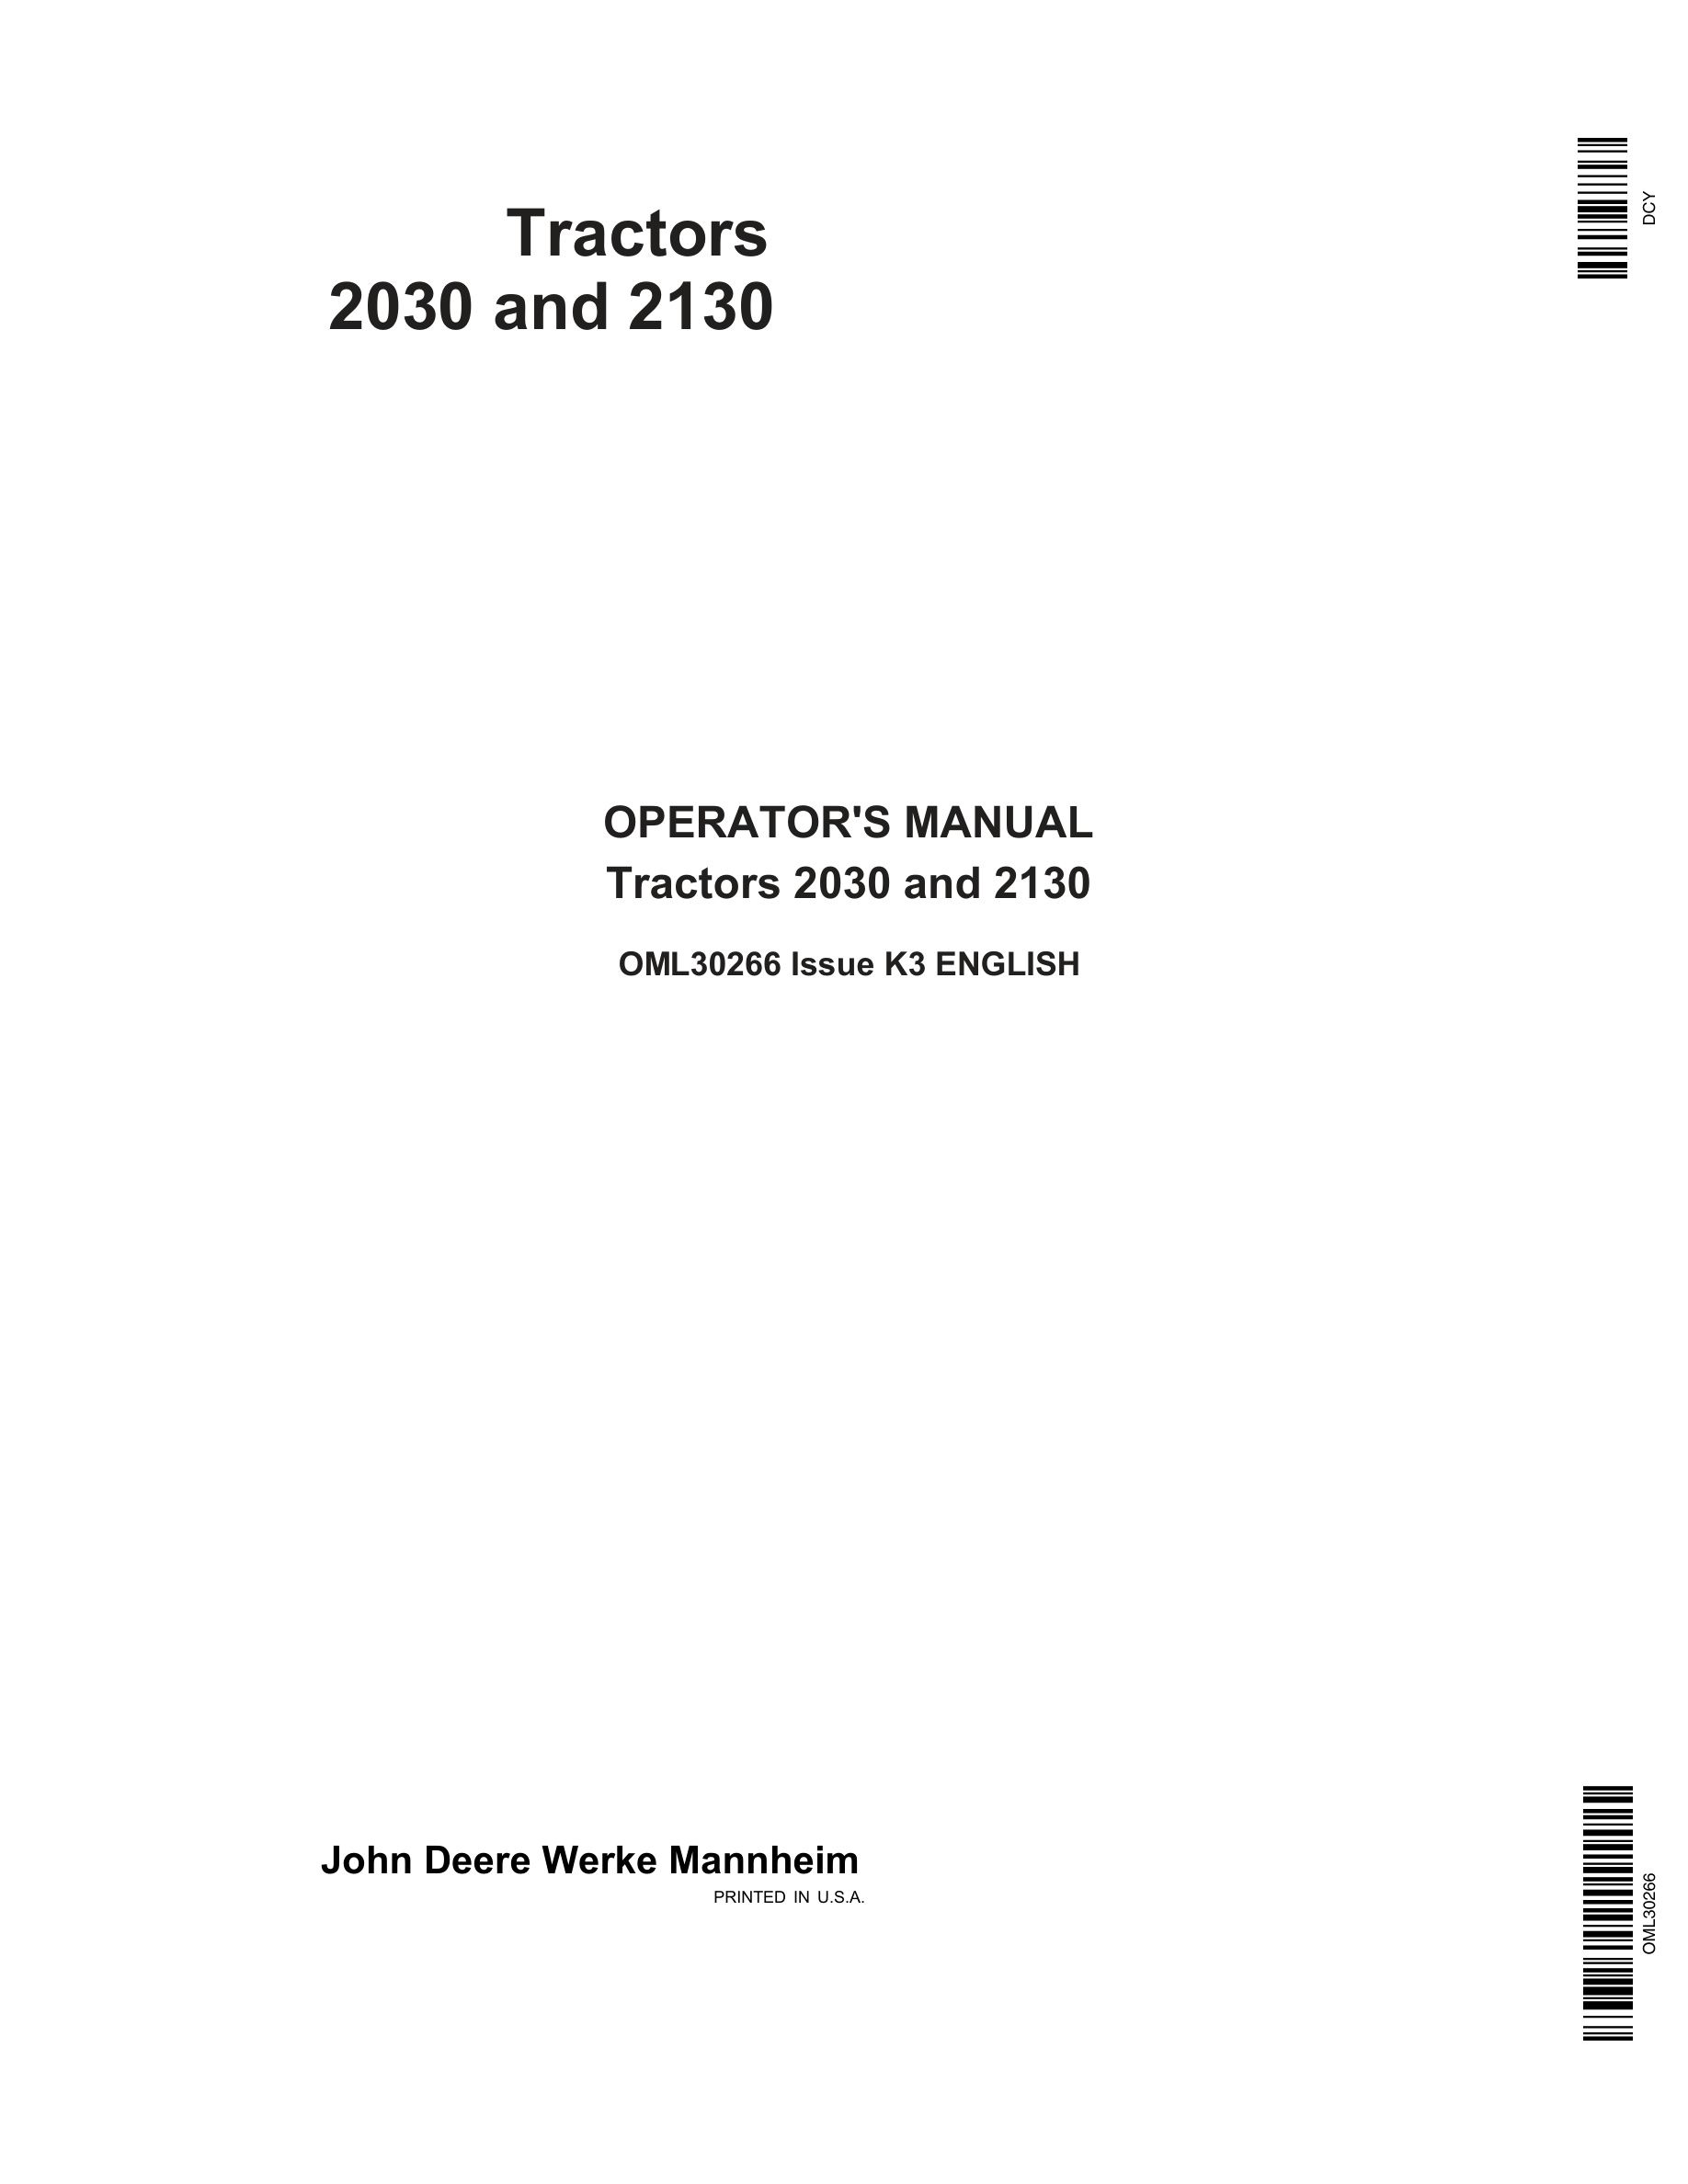 John Deere 2030 And 2130 Tractors Operator Manuals OML30266-1